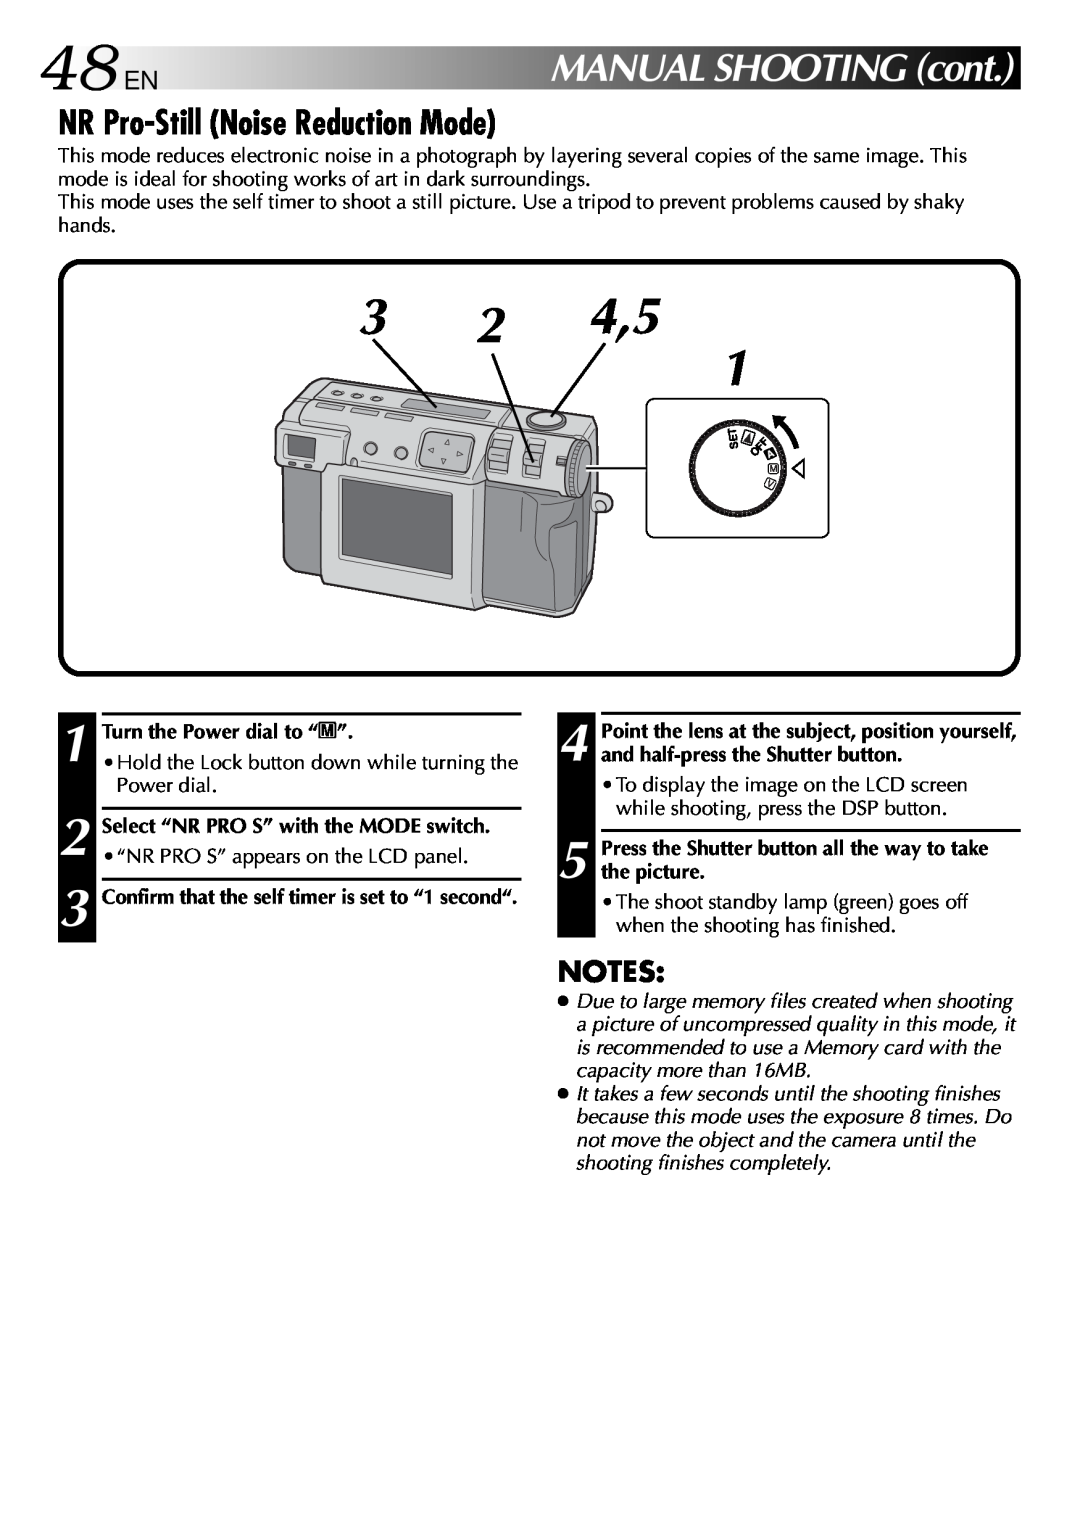 JVC GC-QX3 manual 48EN, NR Pro-Still Noise Reduction Mode, 3 2 4,5, MANUALSHOOTINGcont, Turn the Power dial to “M” 